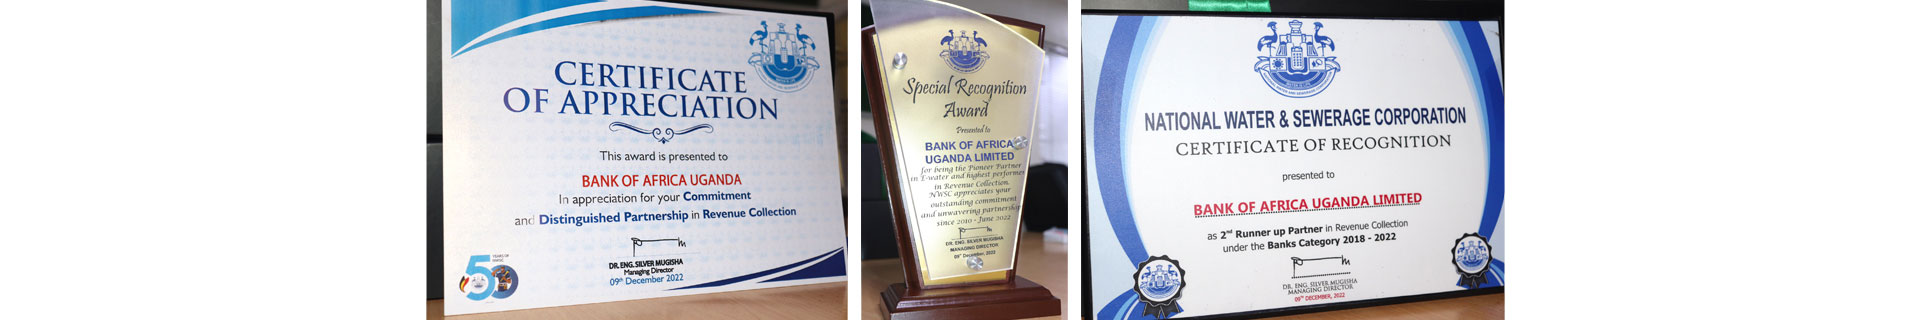 BOA-UGANDA honorée par la société NWSC